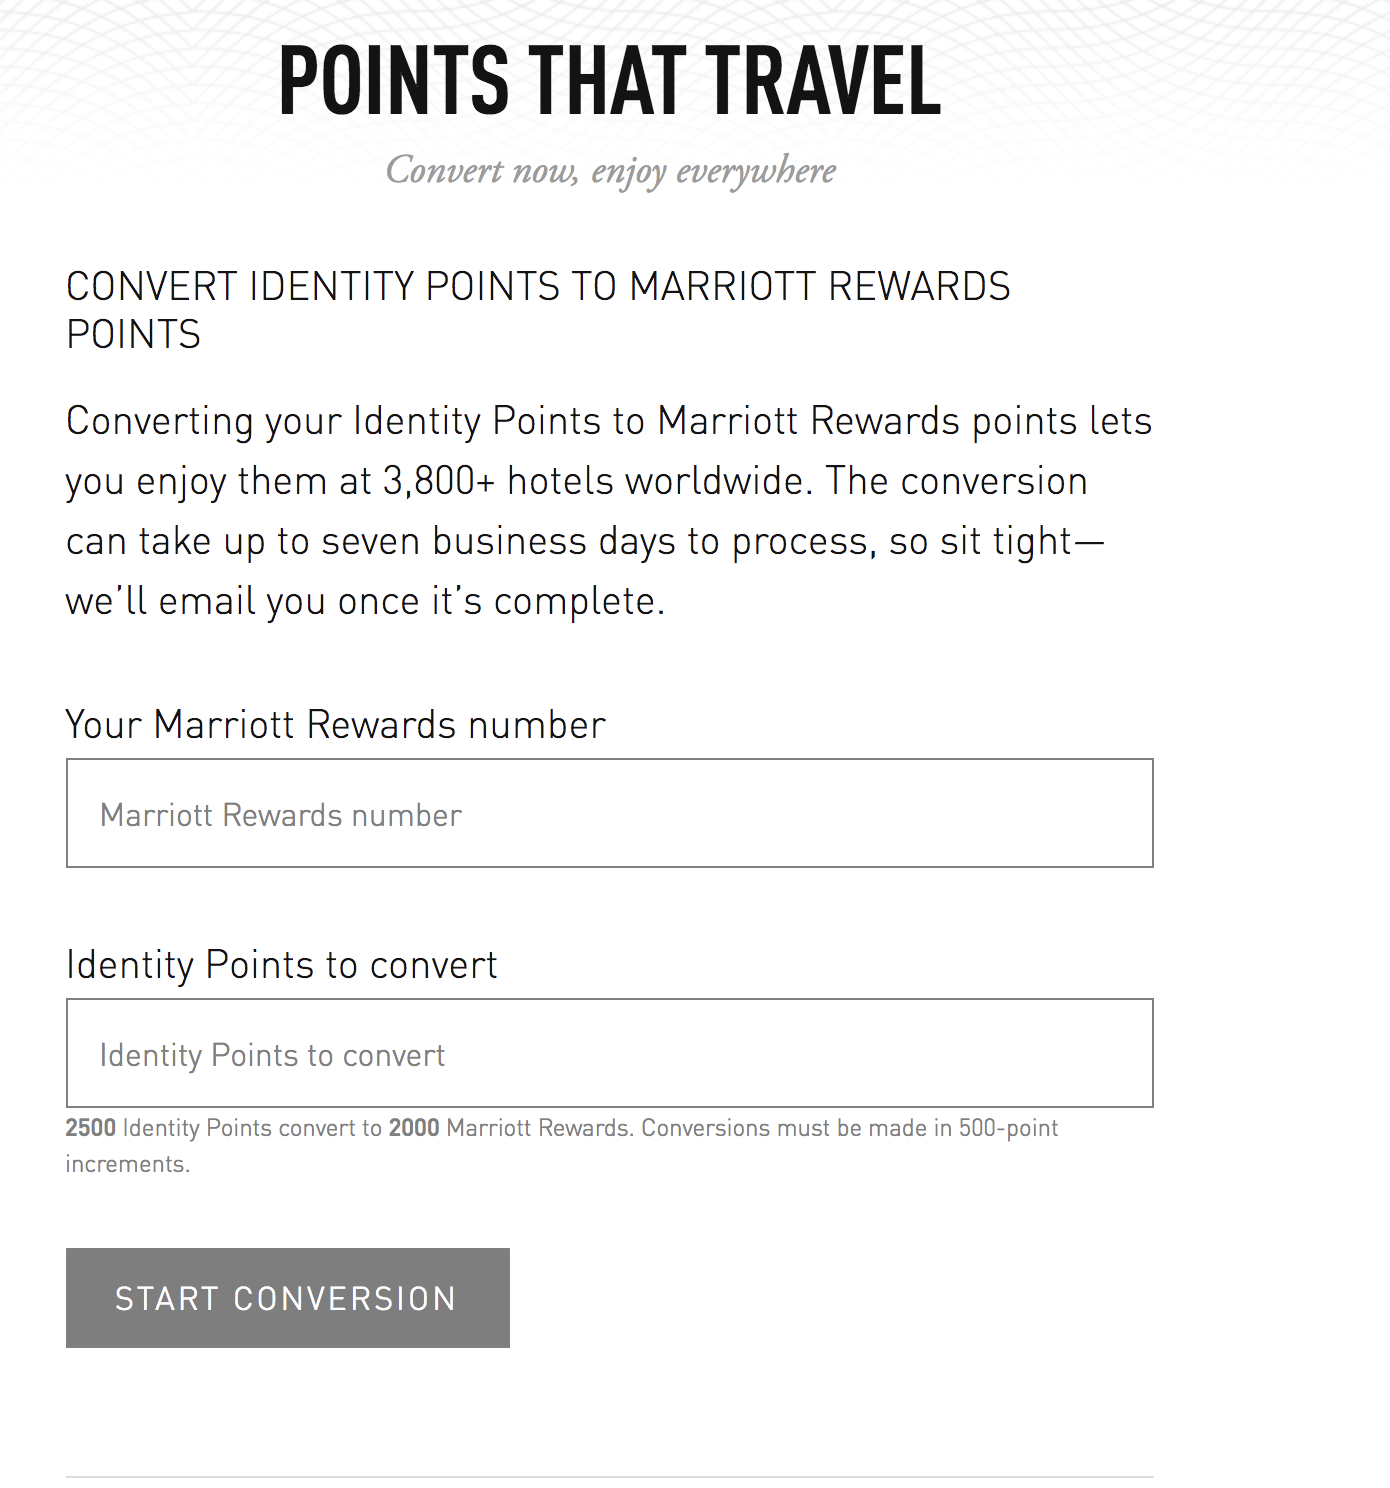 Marriott's Cosmopolitan Identity Rewards Introduces Easy Online Account Management